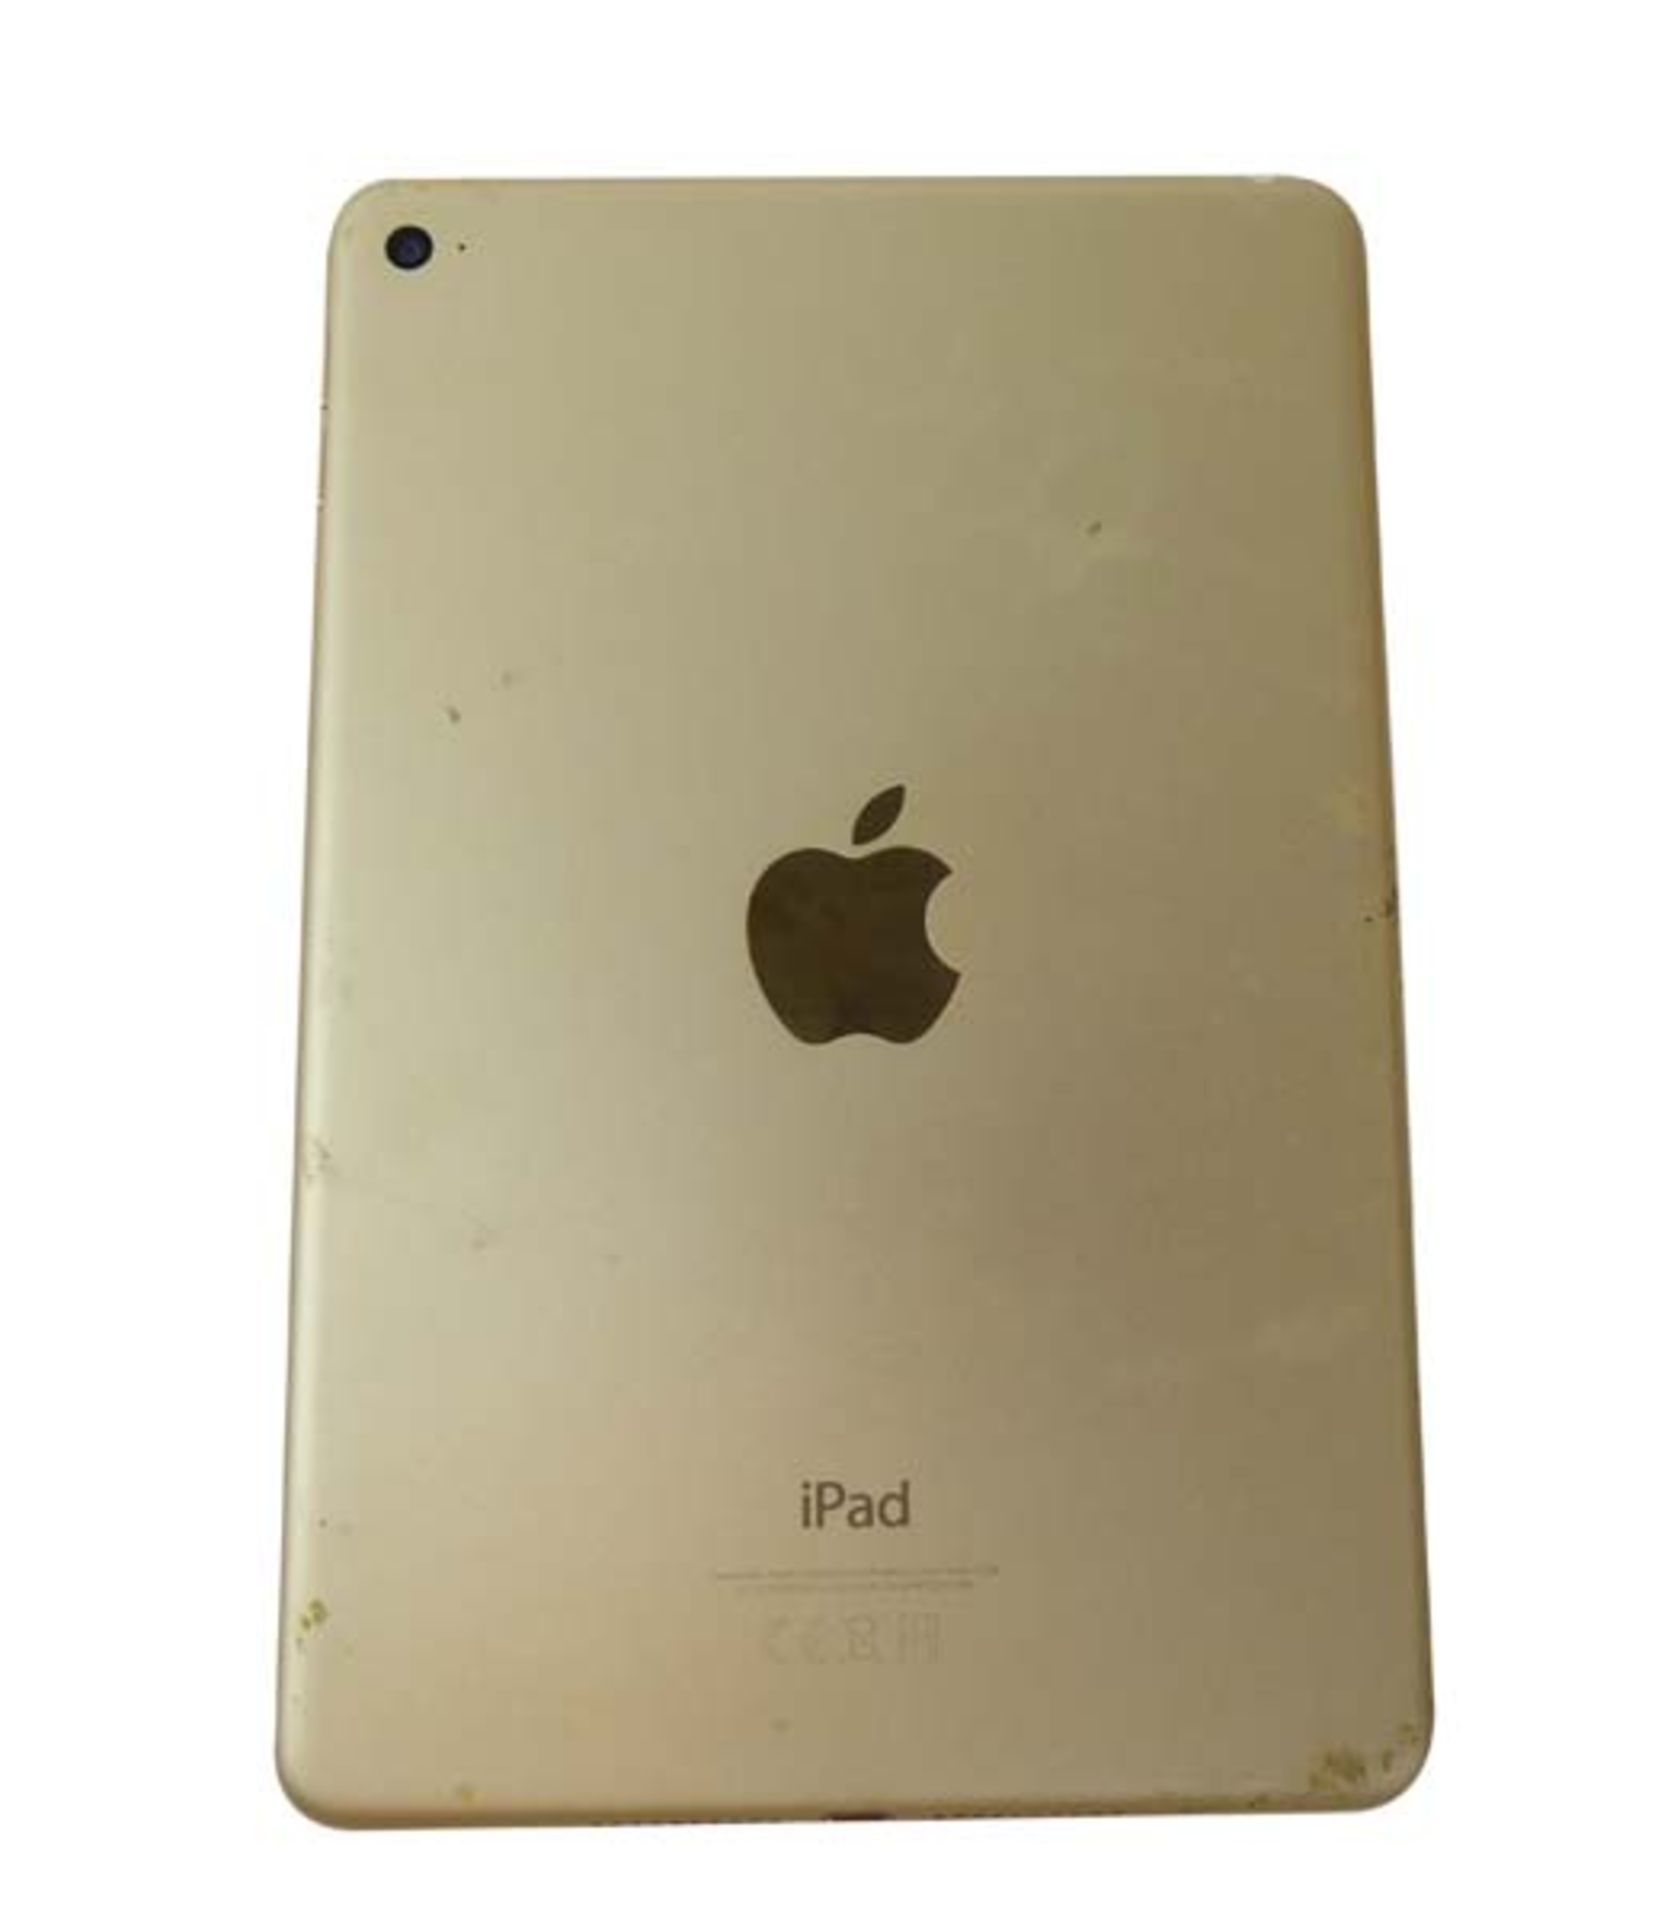 iPad Mini 4 128GB Gold tablet (A1538) - Image 3 of 3